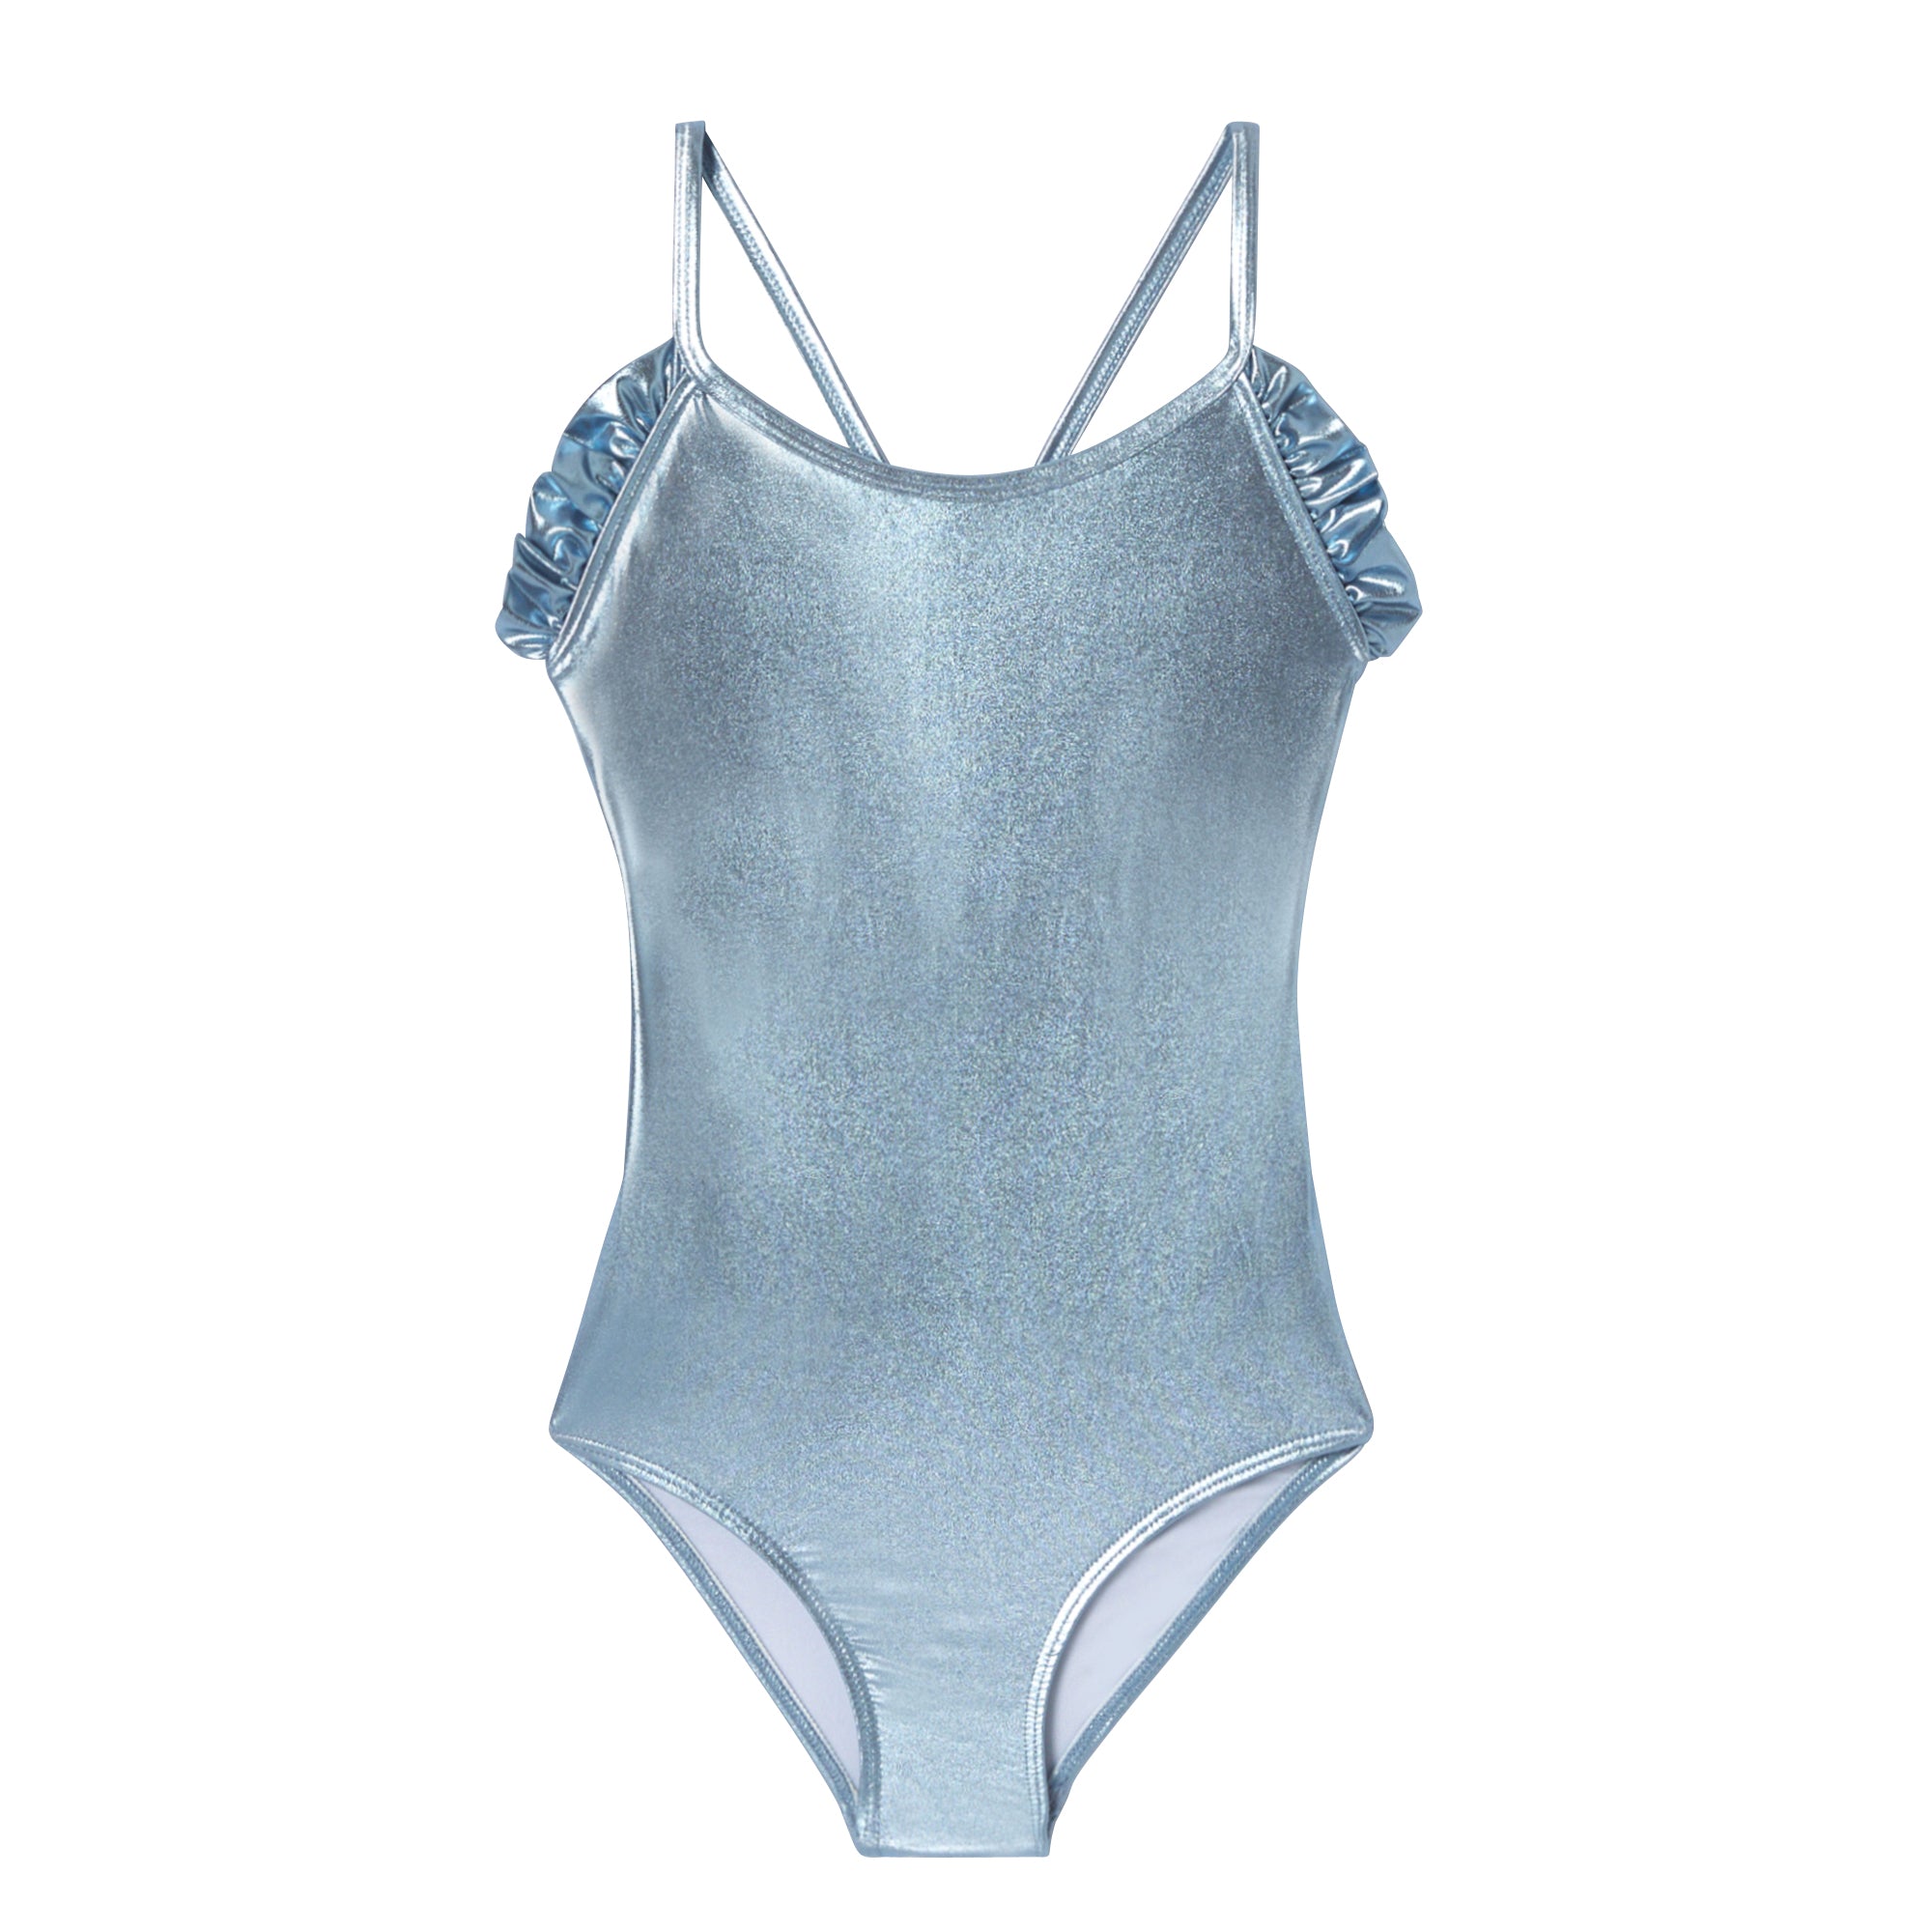 Girls' one-piece swimsuit, iridescent silver